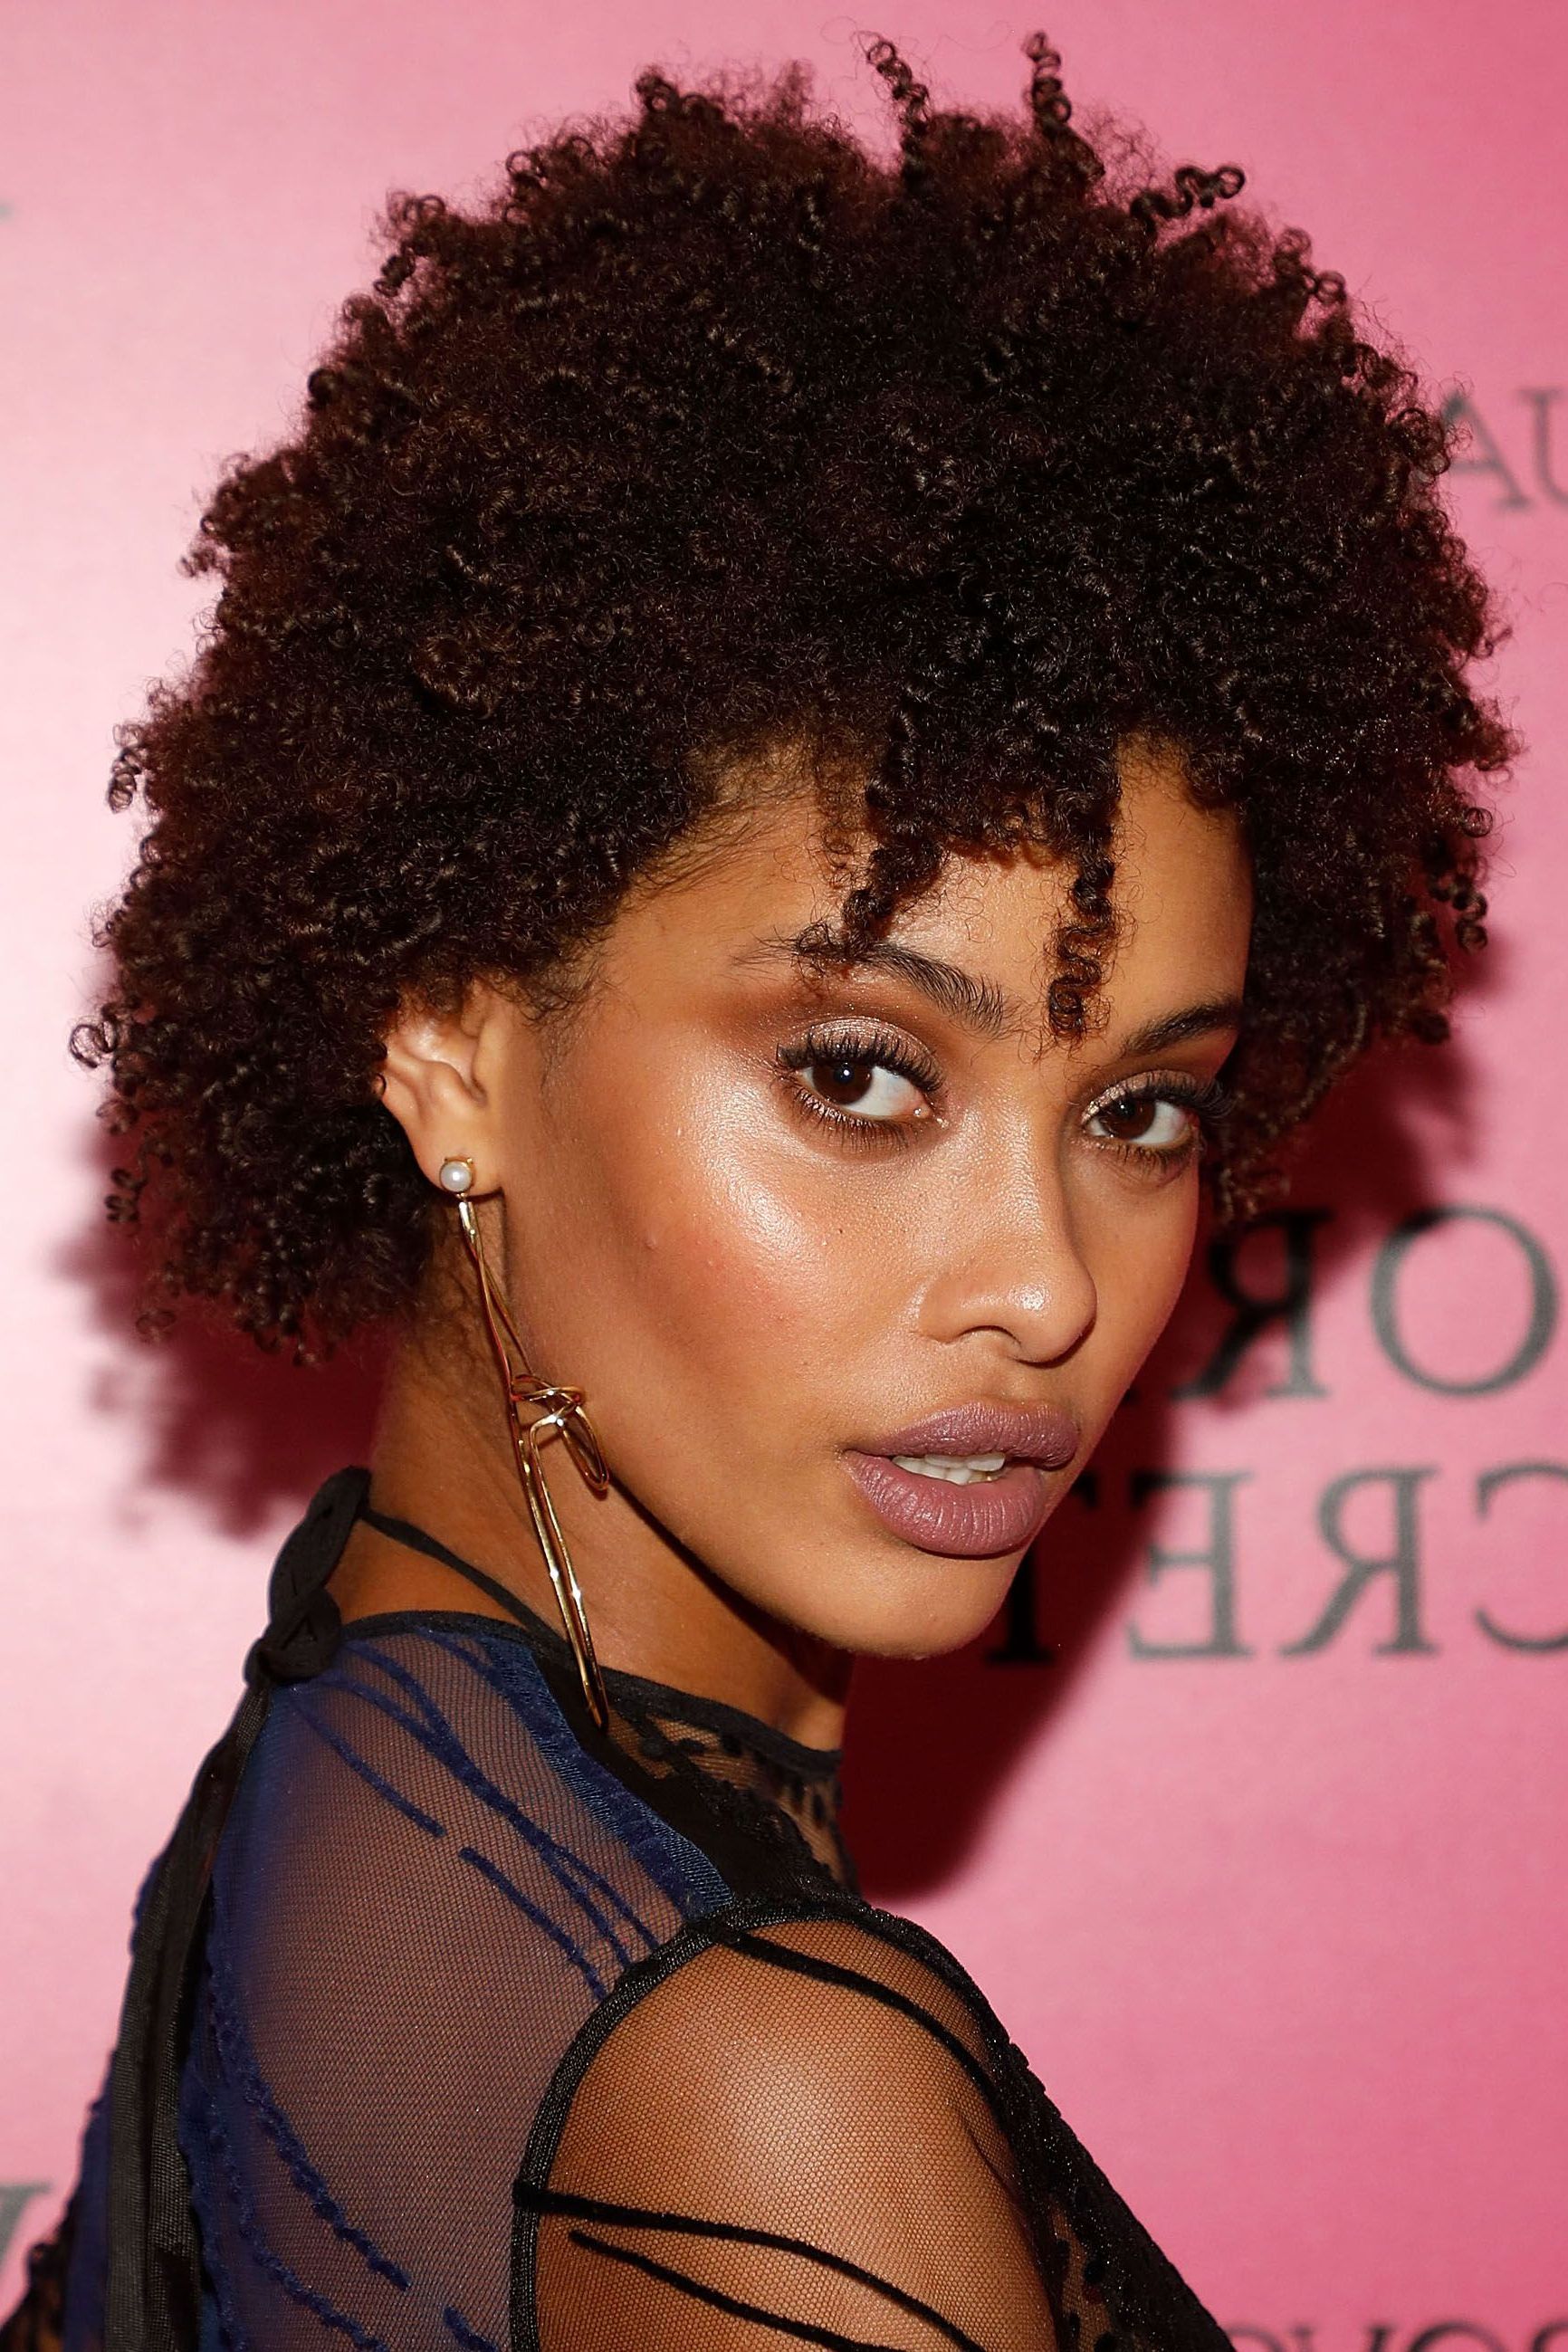 Popular Medium Haircuts For Black Women Natural Hair With 30 Easy Natural Hairstyles For Black Women – Short, Medium & Long (View 16 of 20)